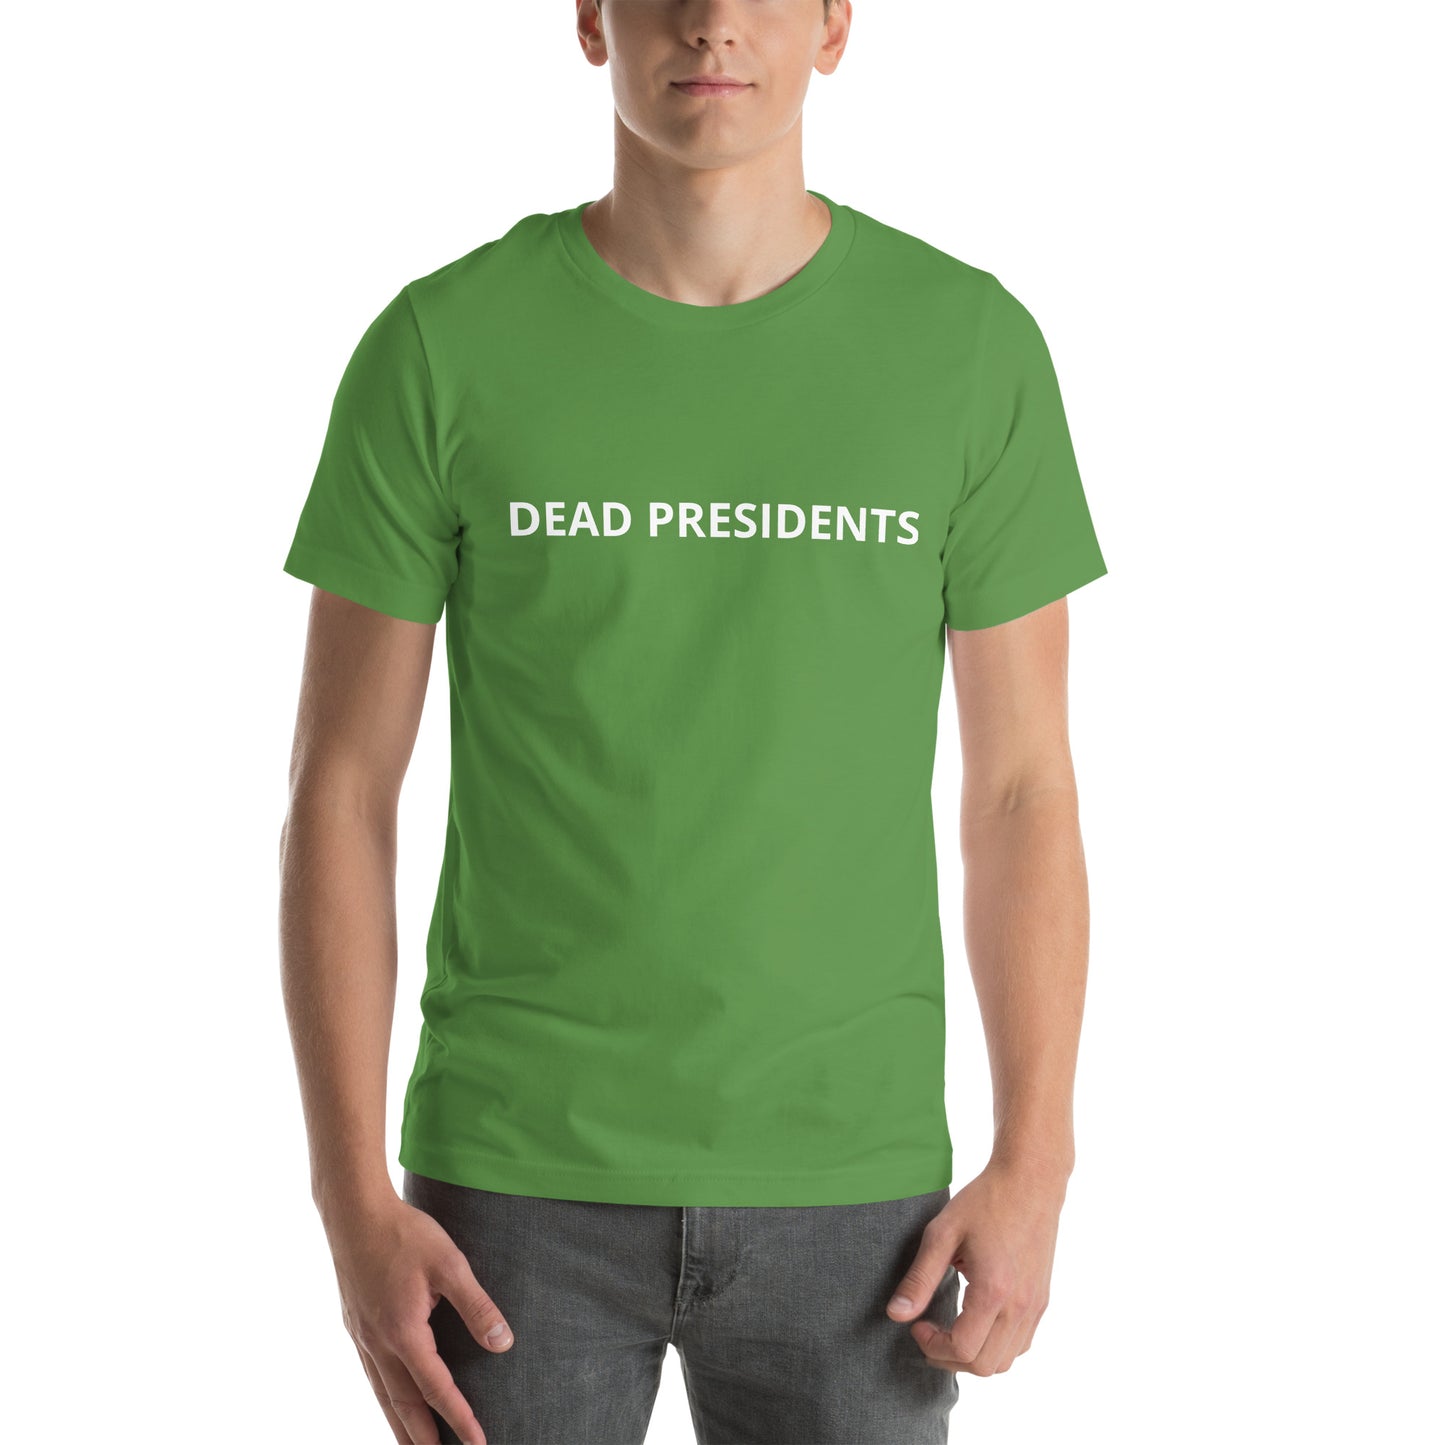 DEAD PRESIDENTS Unisex t-shirt